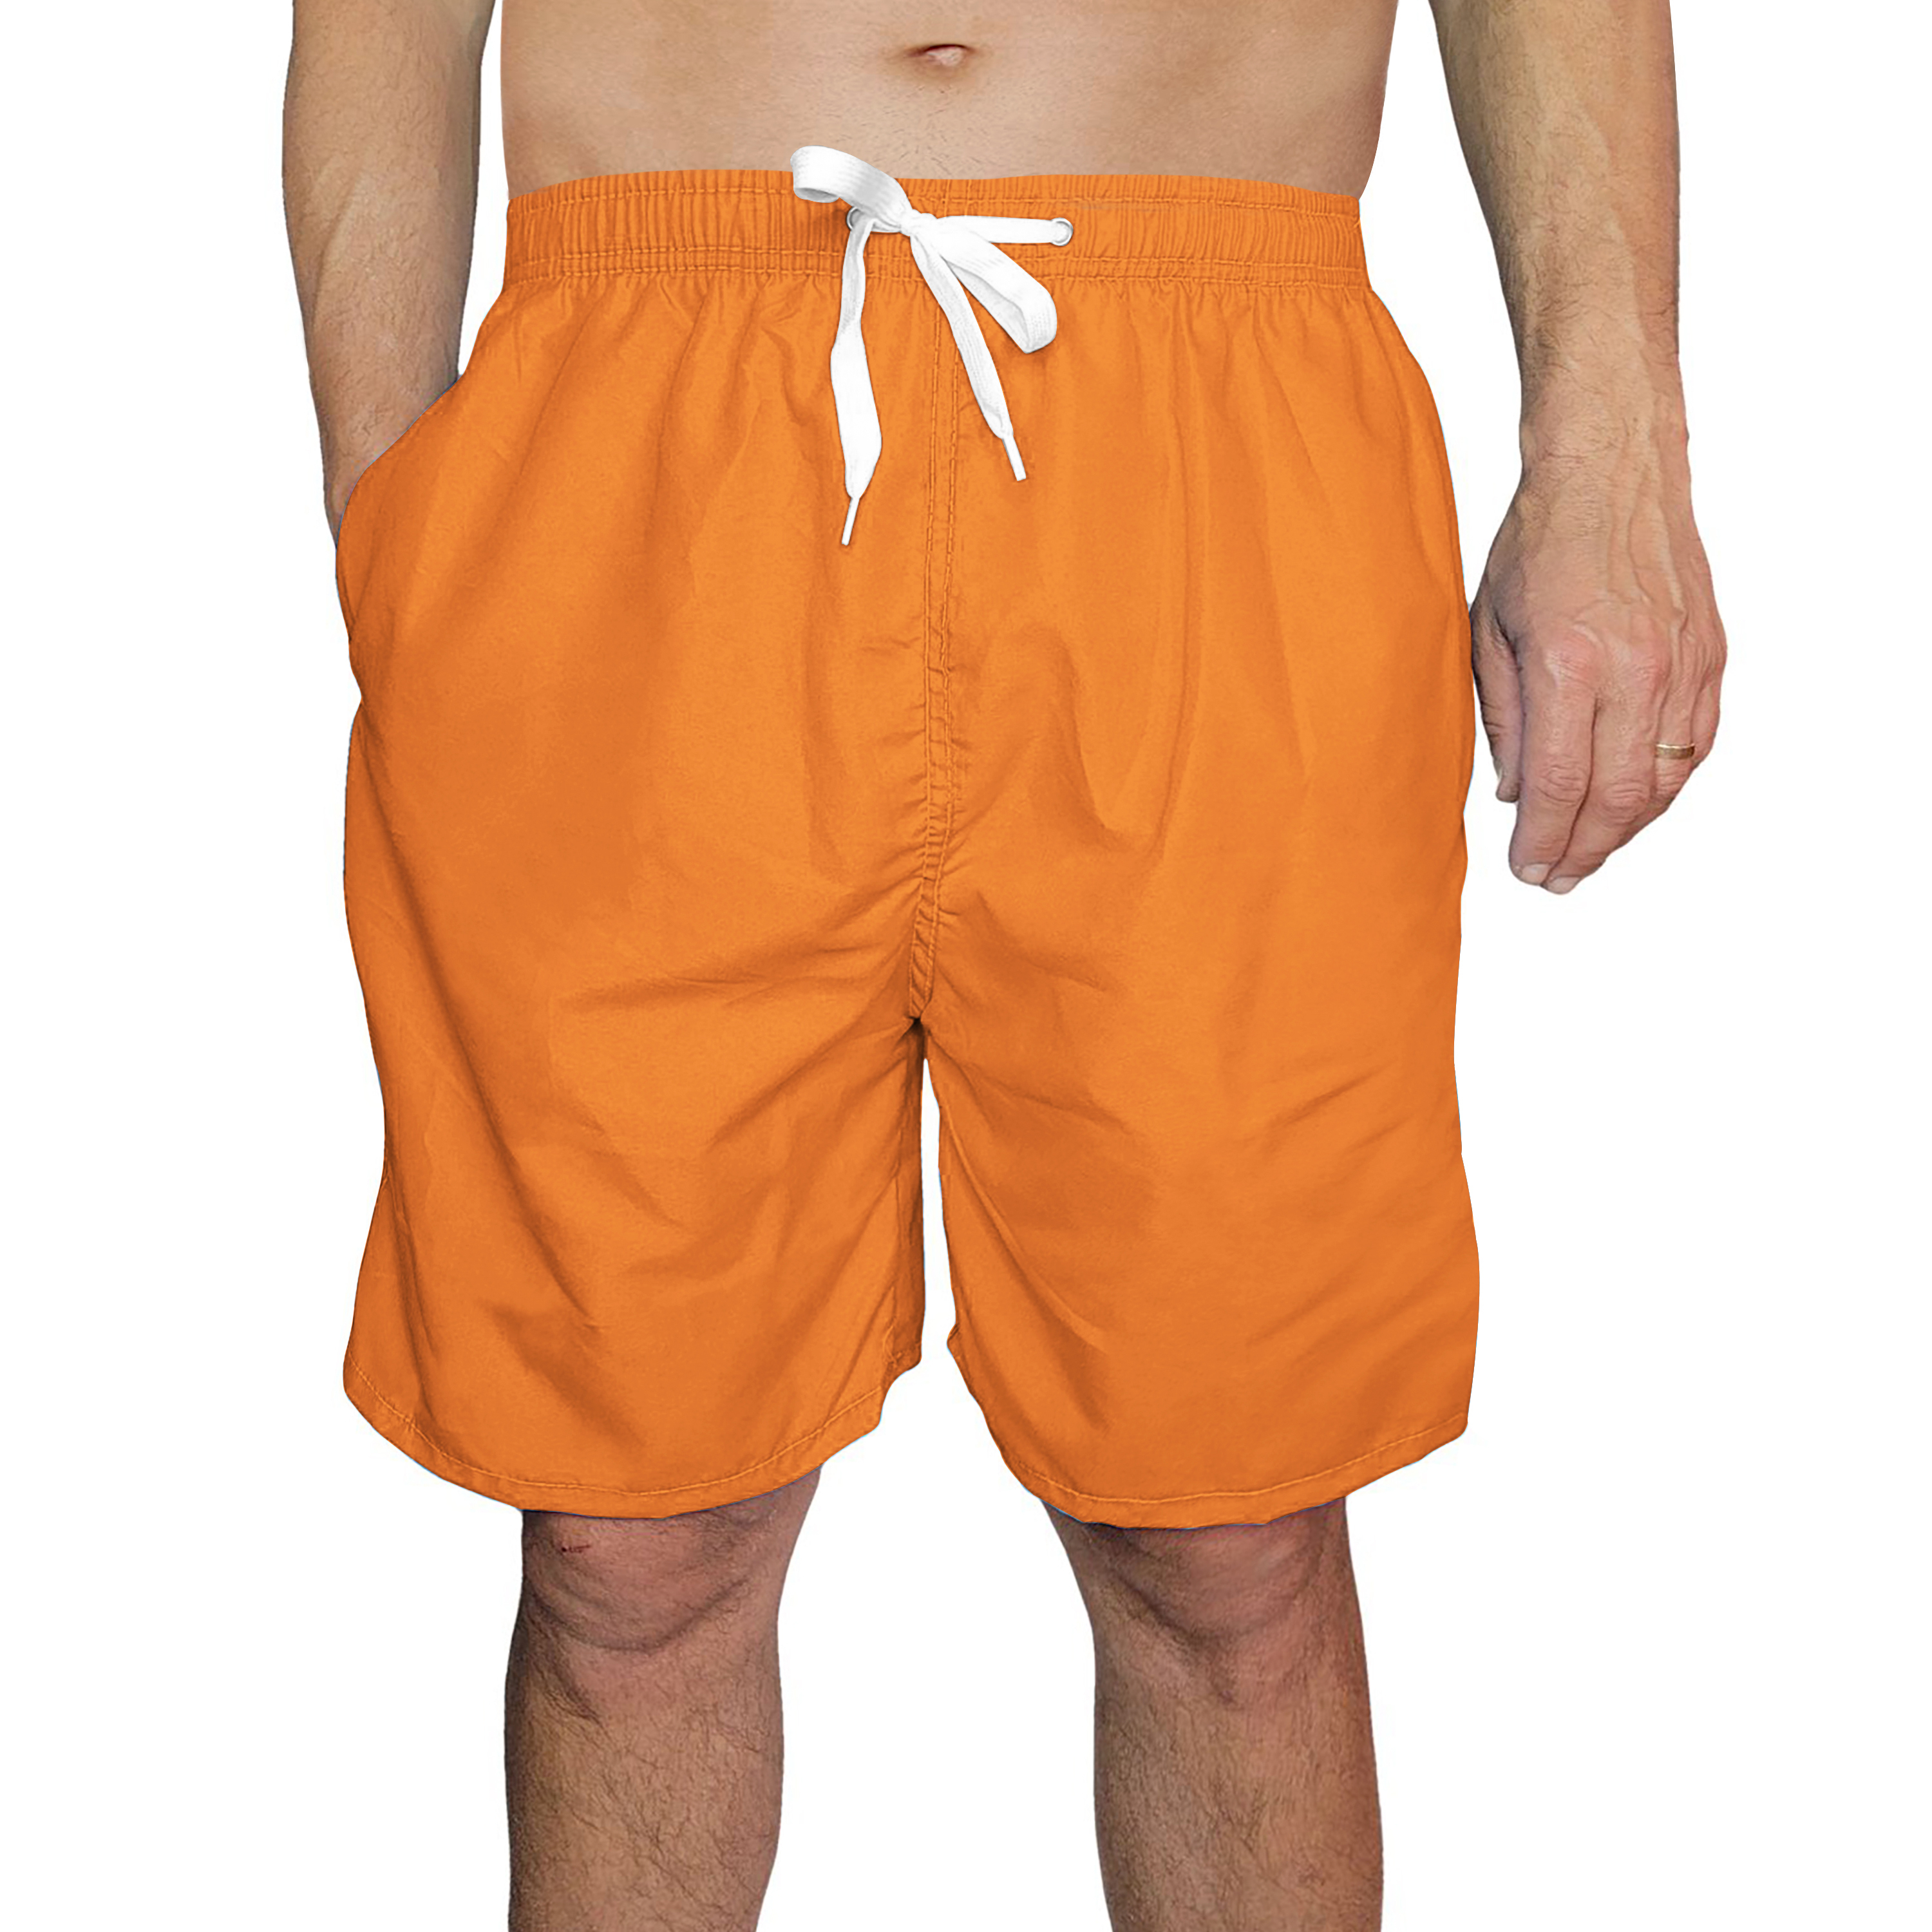 5-Pack Men's Quick Dry Swim Trunks With Pockets Solid Bathing Beachwear Flex Board Shorts - XXL